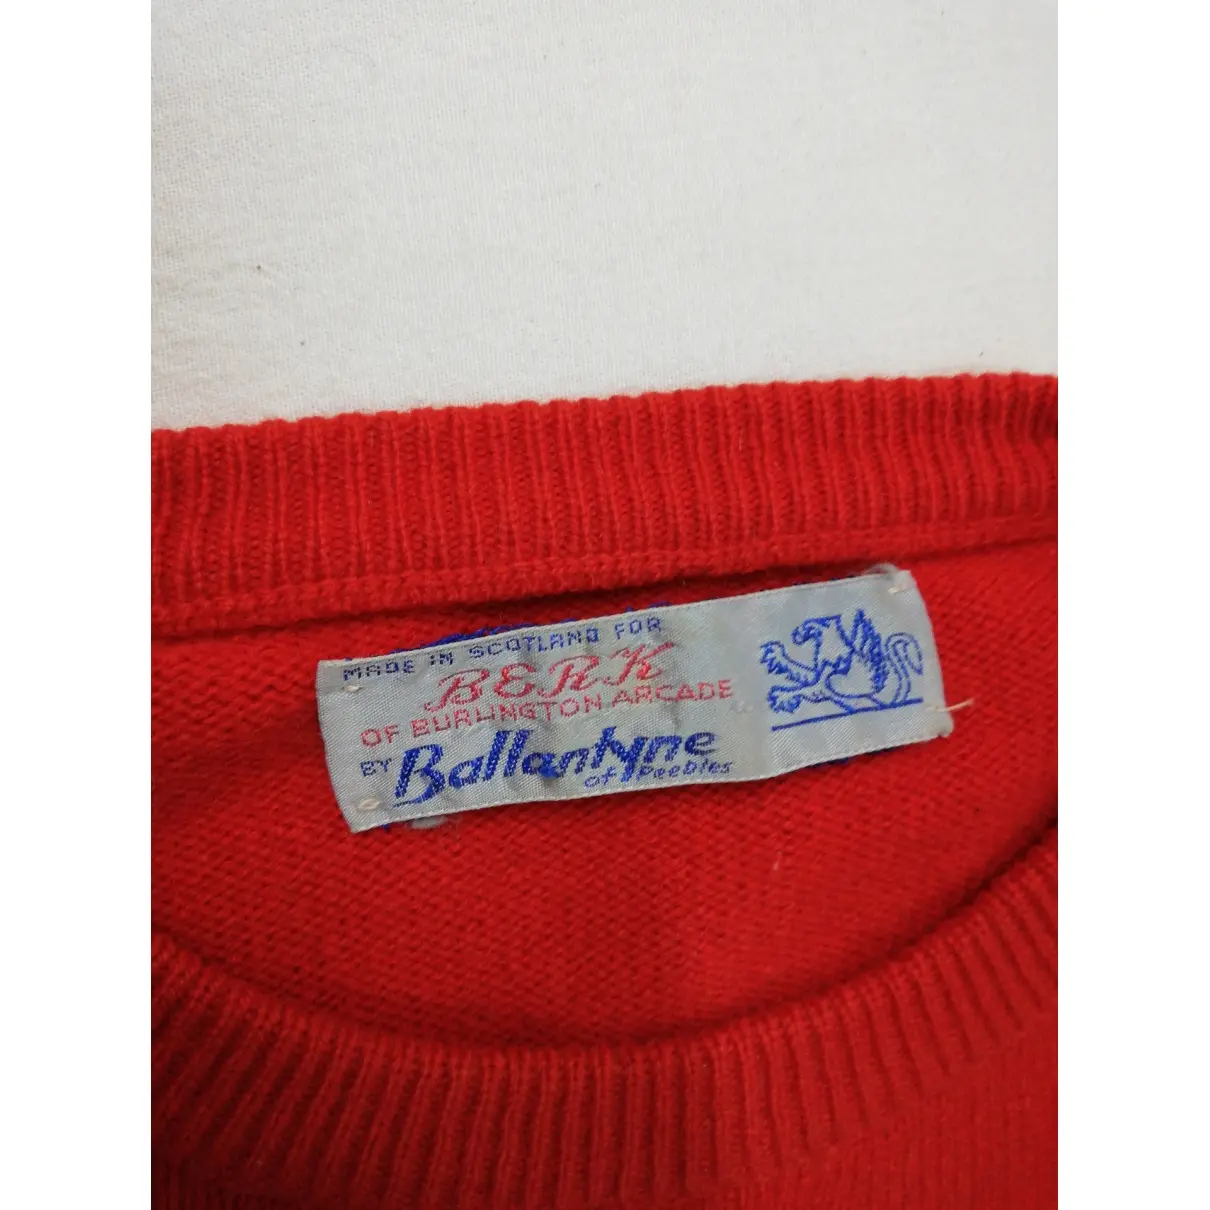 Buy Ballantyne Cashmere pull online - Vintage